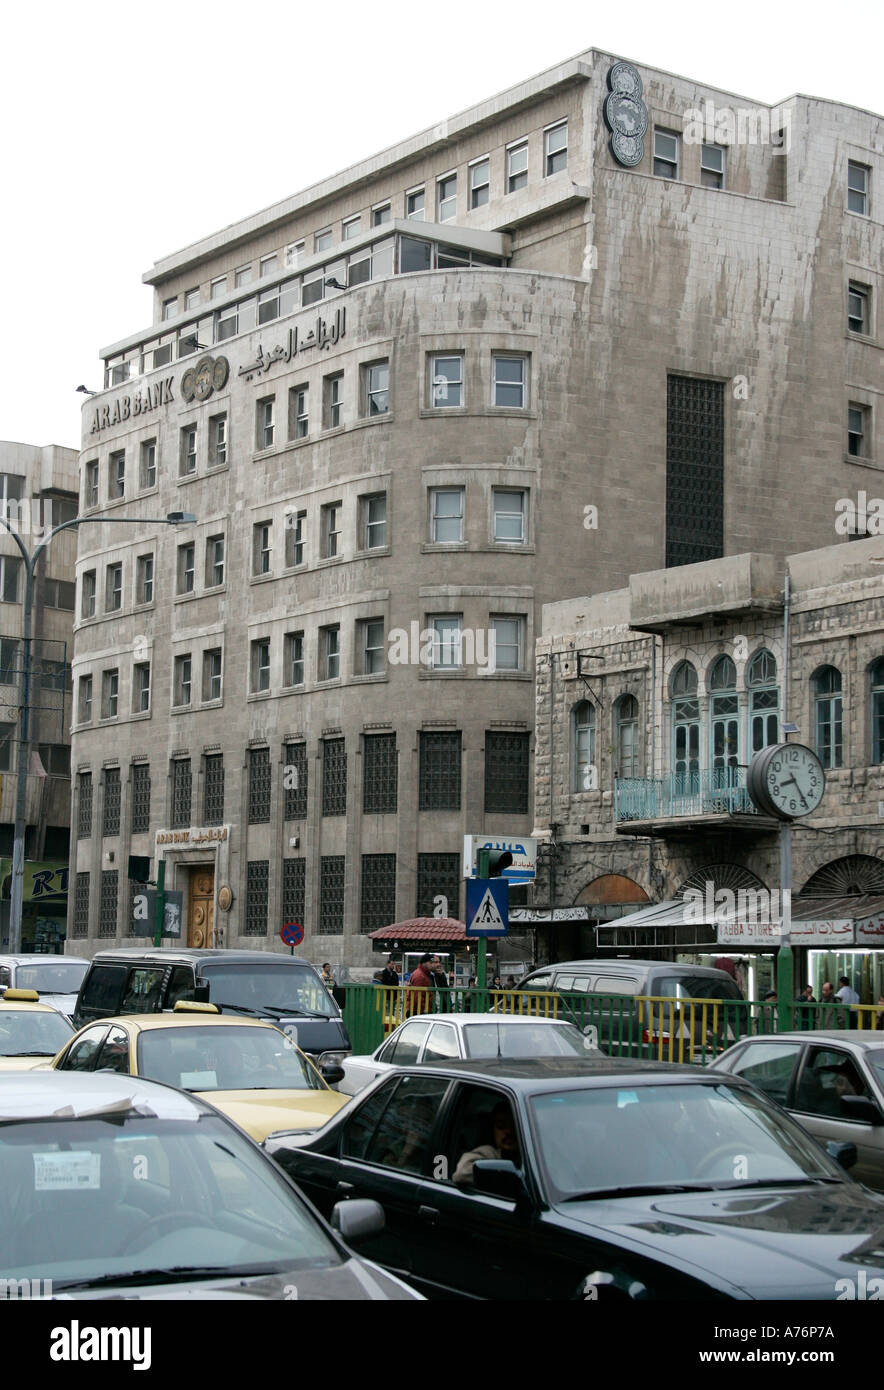 Arab Bank building Amman,Jordan Stock Photo - Alamy